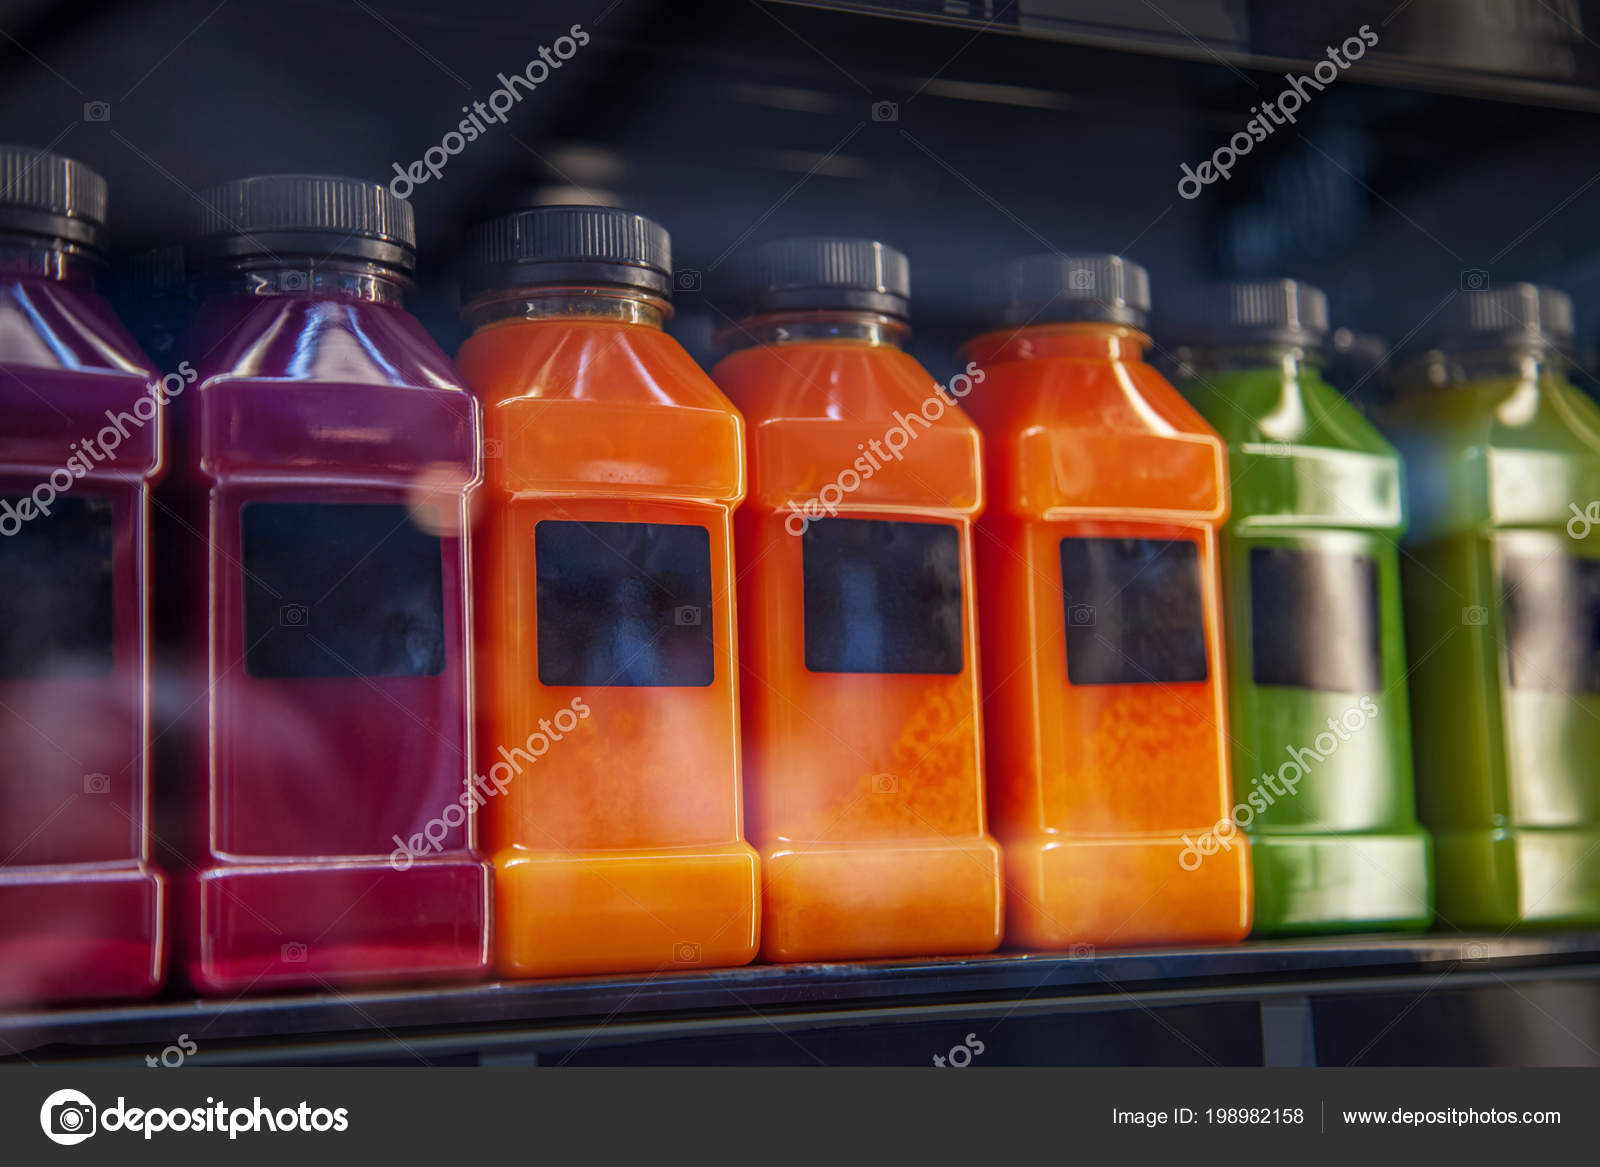 https://st4.depositphotos.com/17897224/19898/i/1600/depositphotos_198982158-stock-photo-different-types-fresh-juices-bottles.jpg